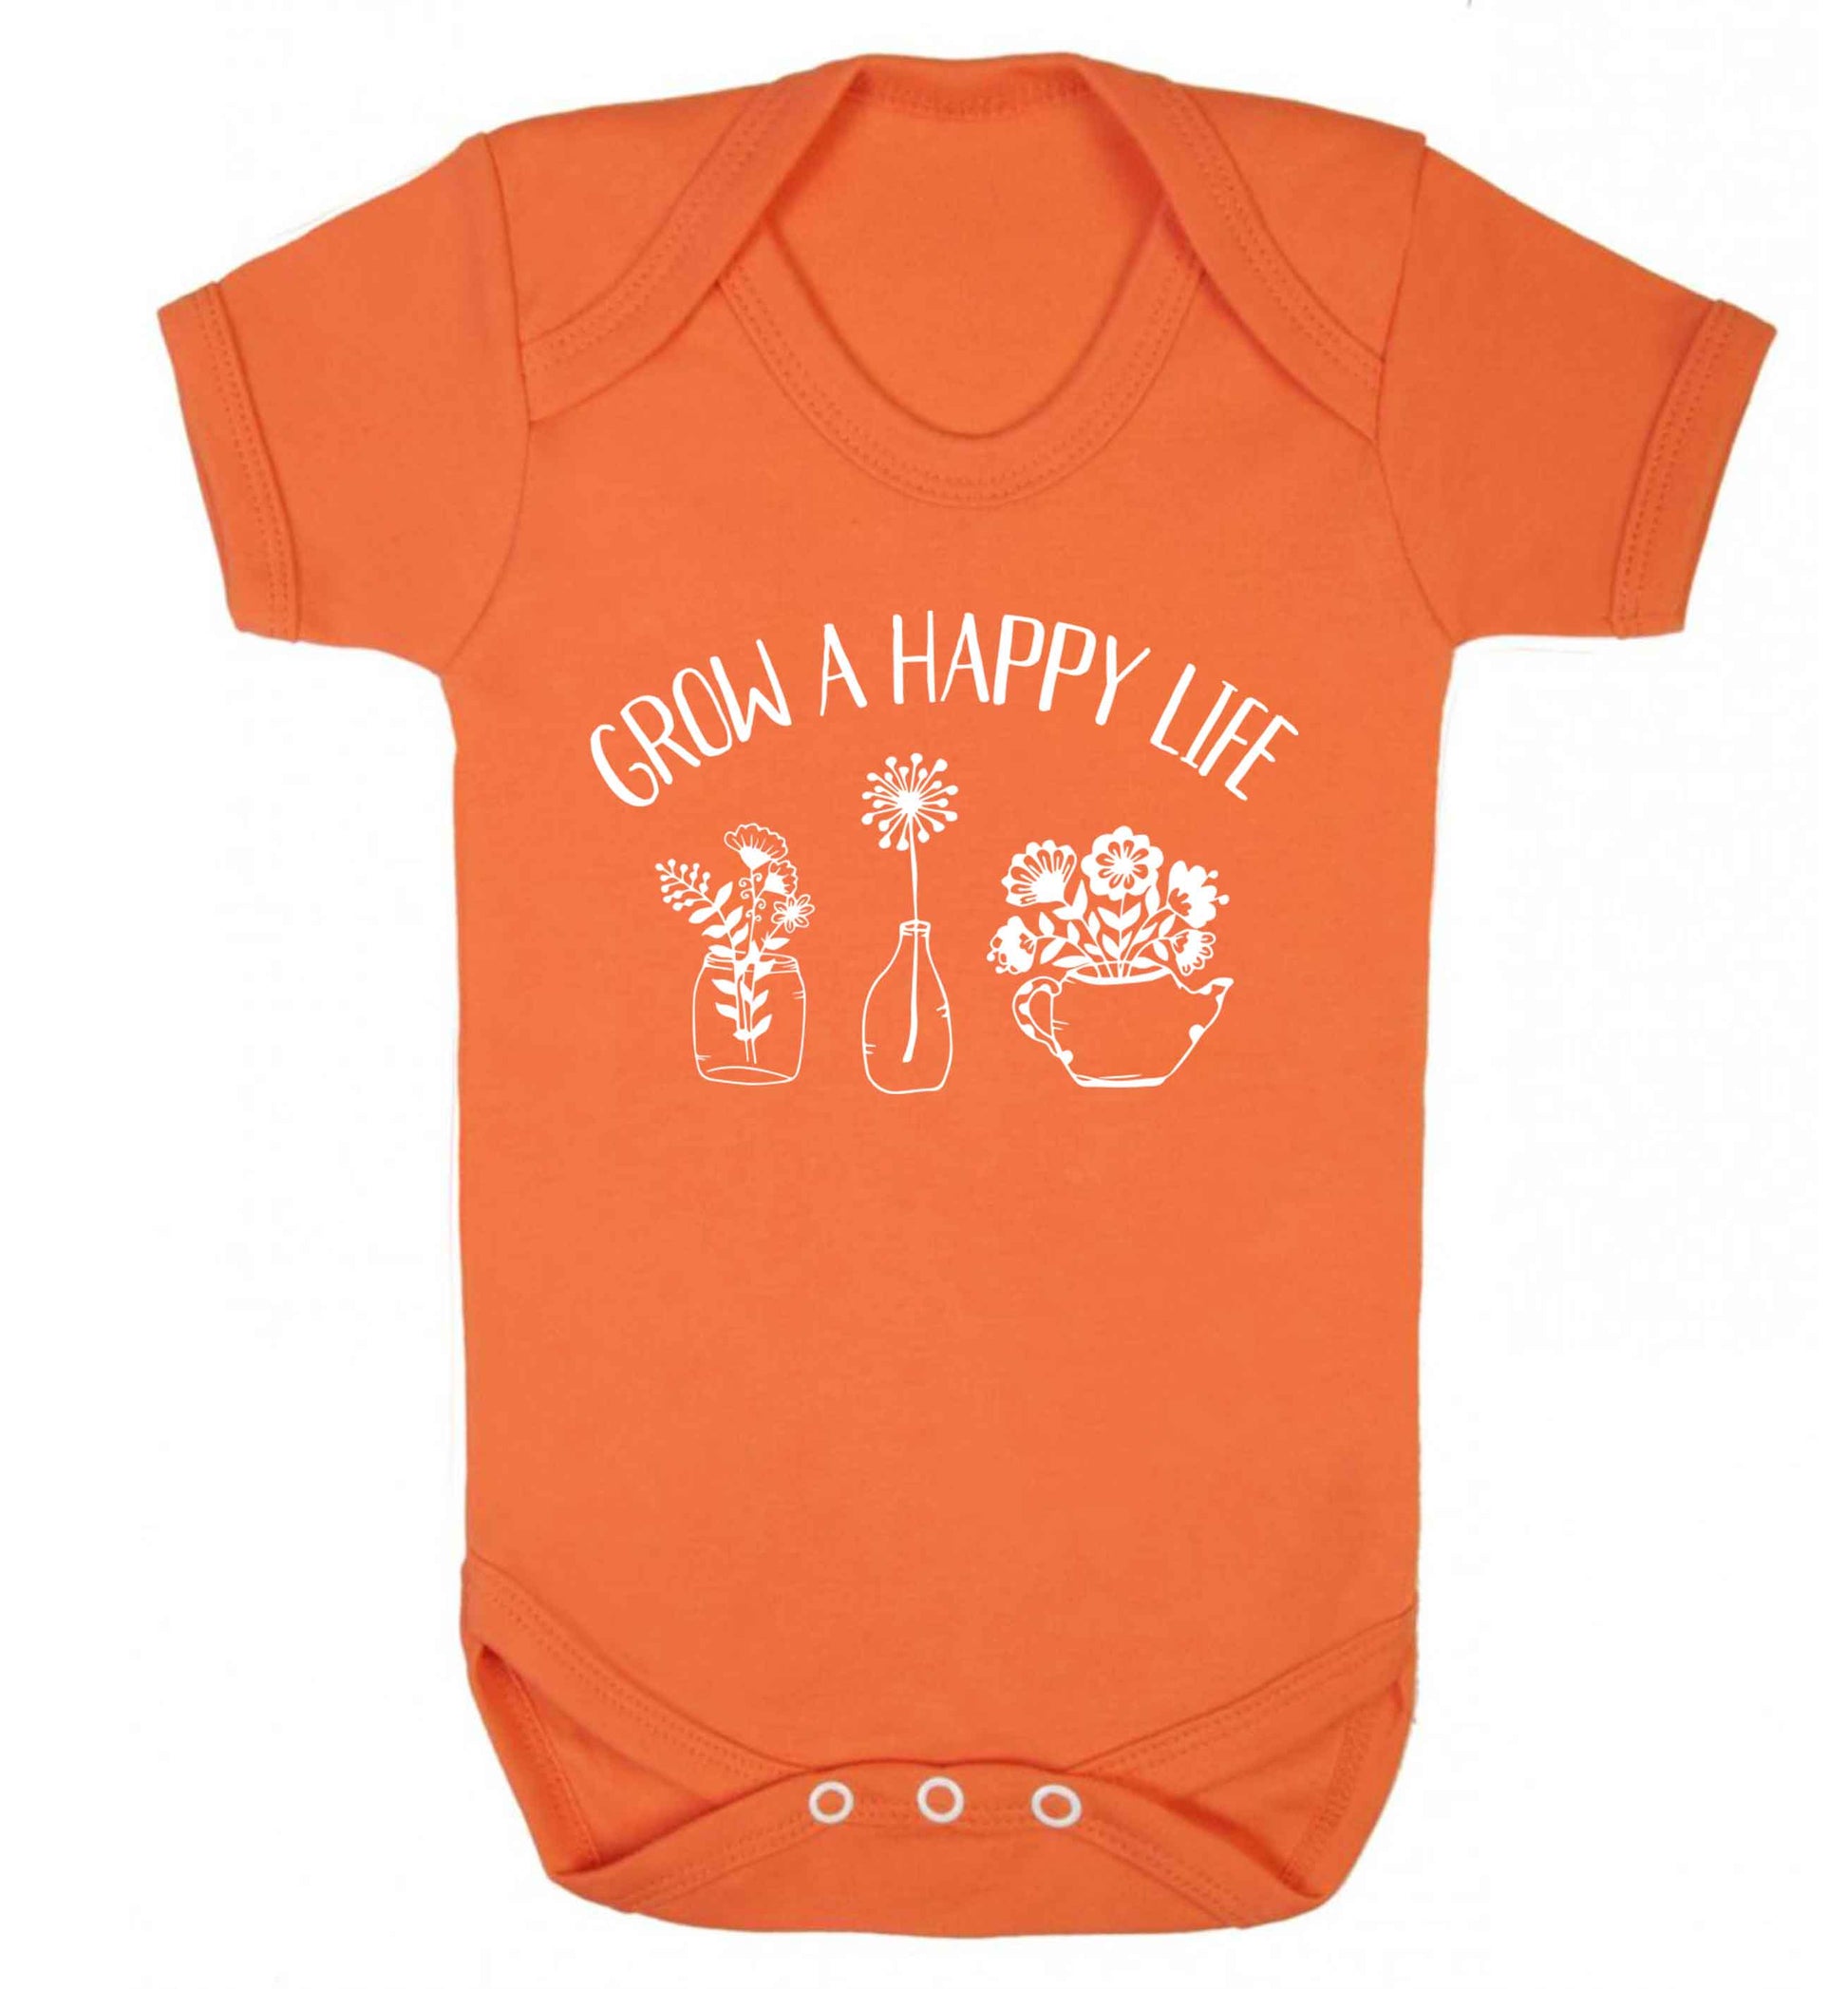 Grow a happy life Baby Vest orange 18-24 months